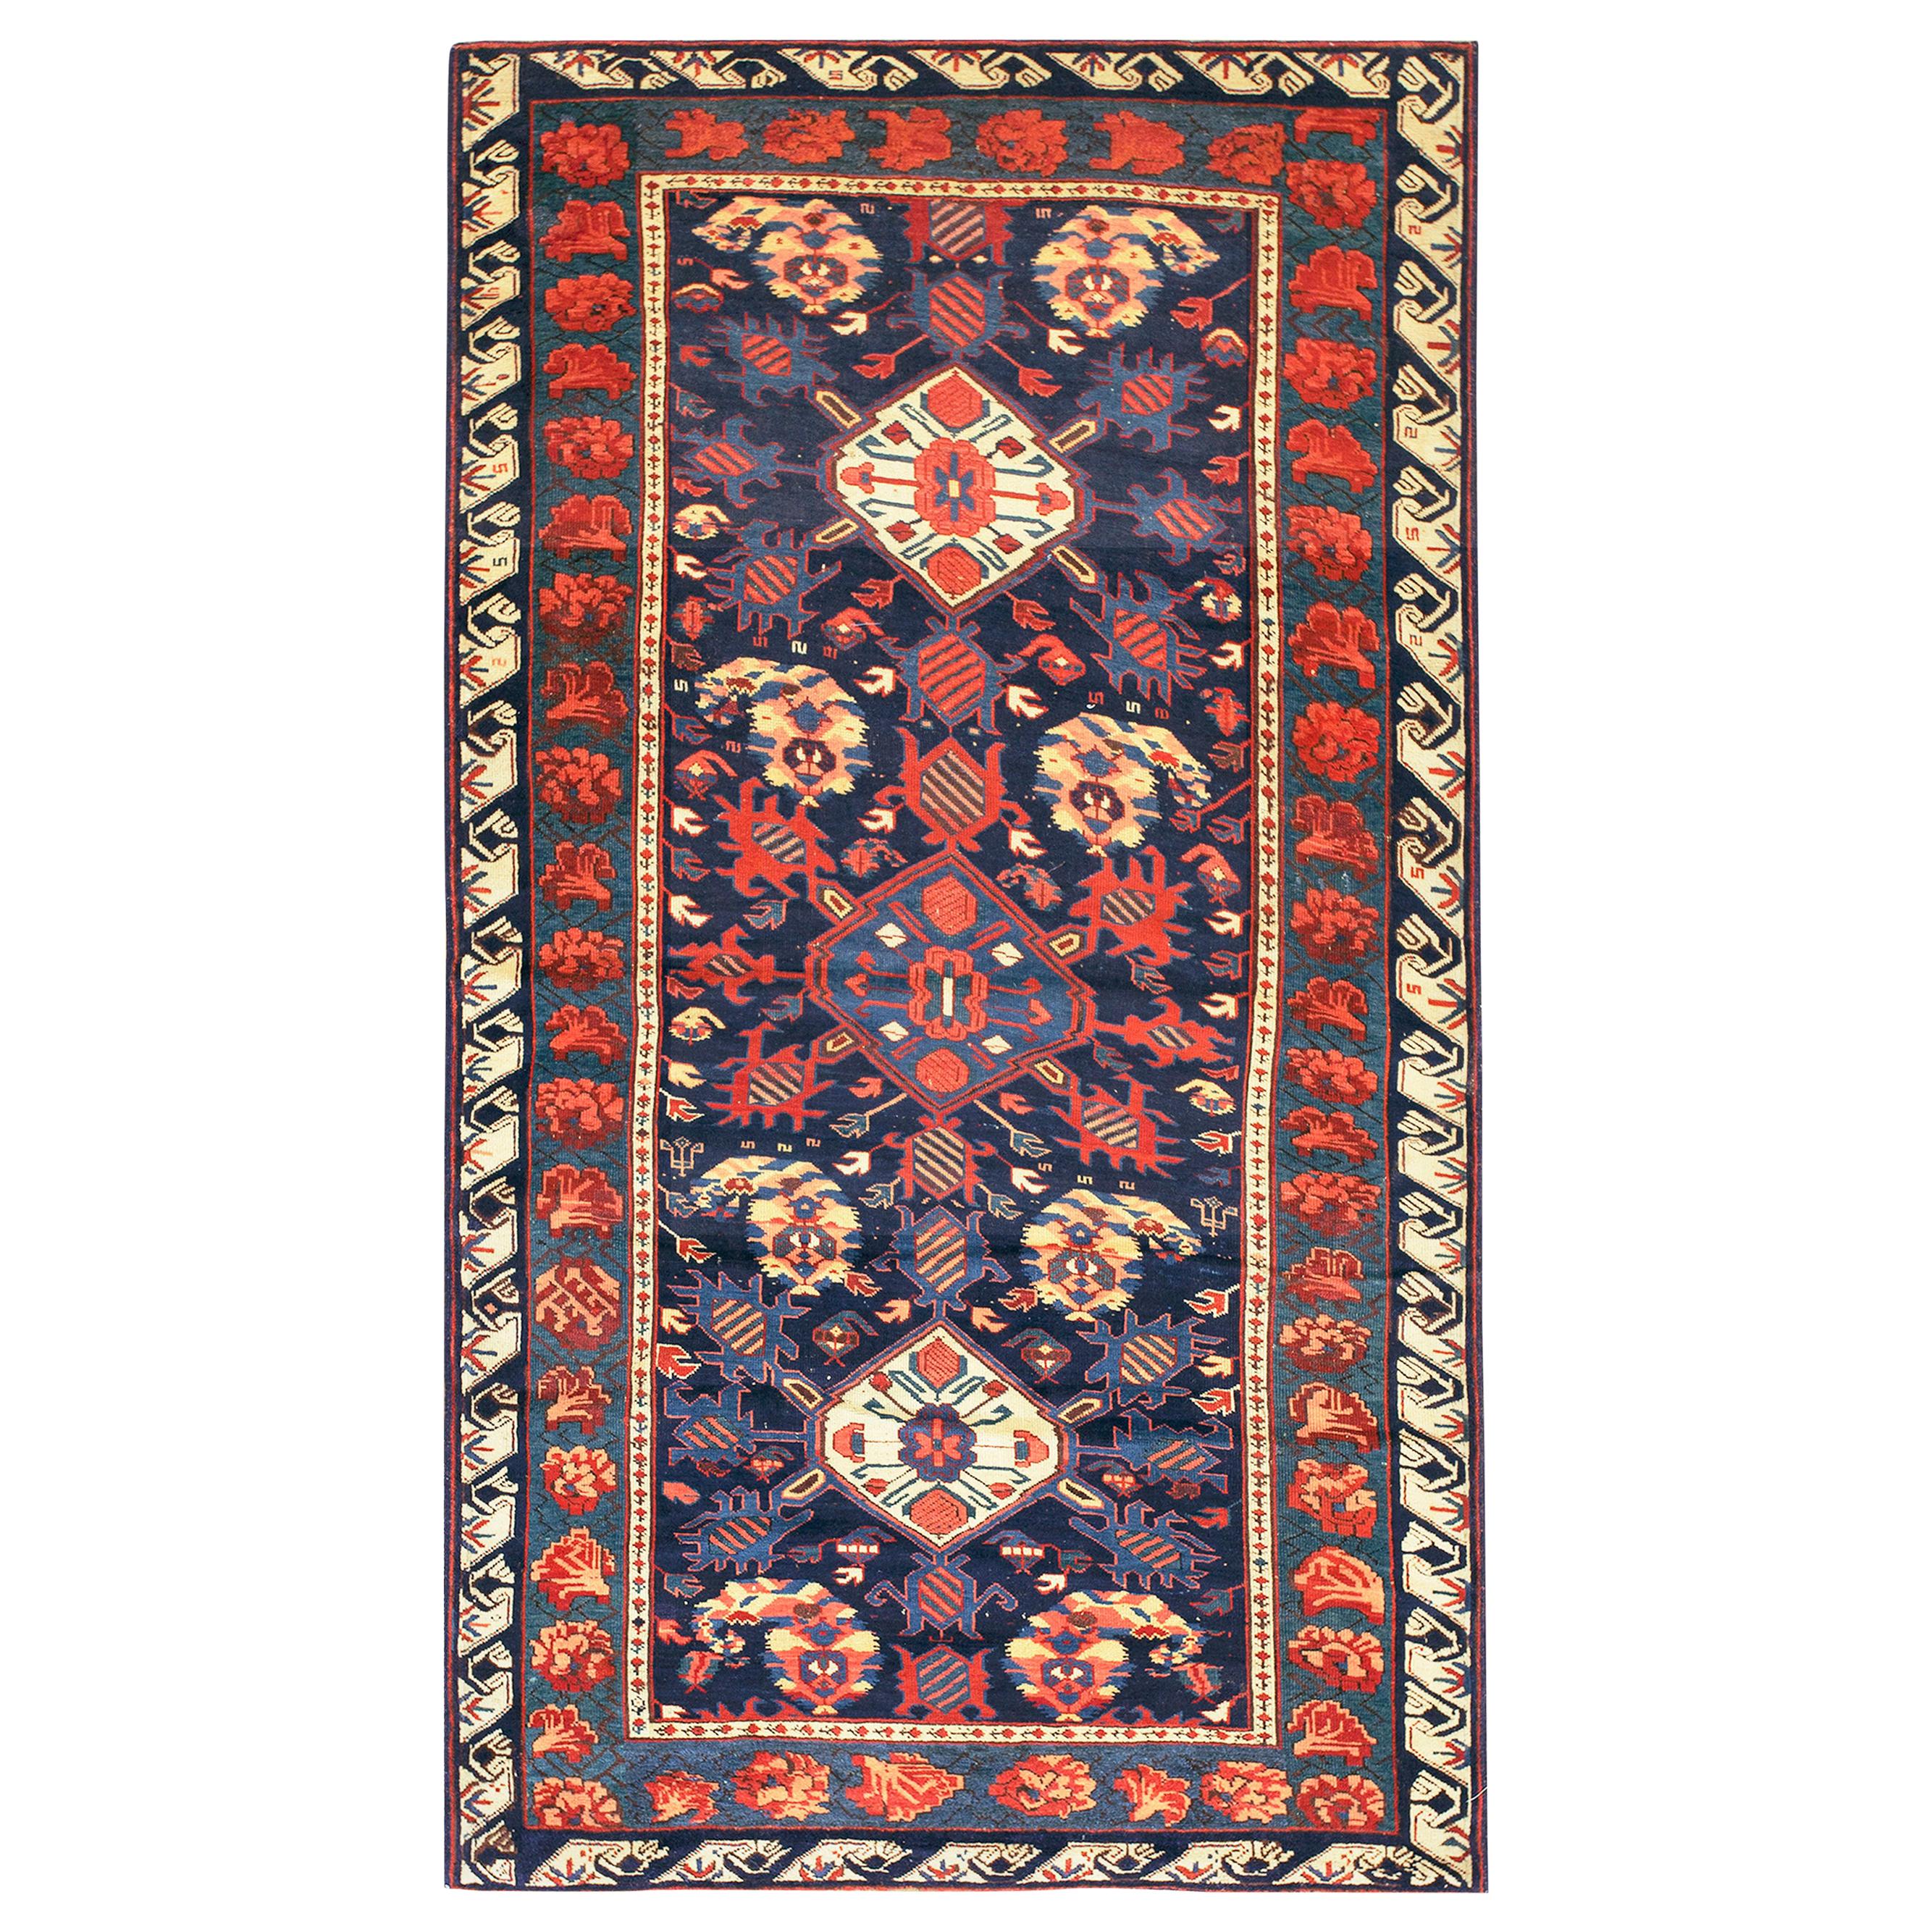 19th Century Caucasian Zeychor Carpet ( 4'2" x 7' - 127 x 213 )